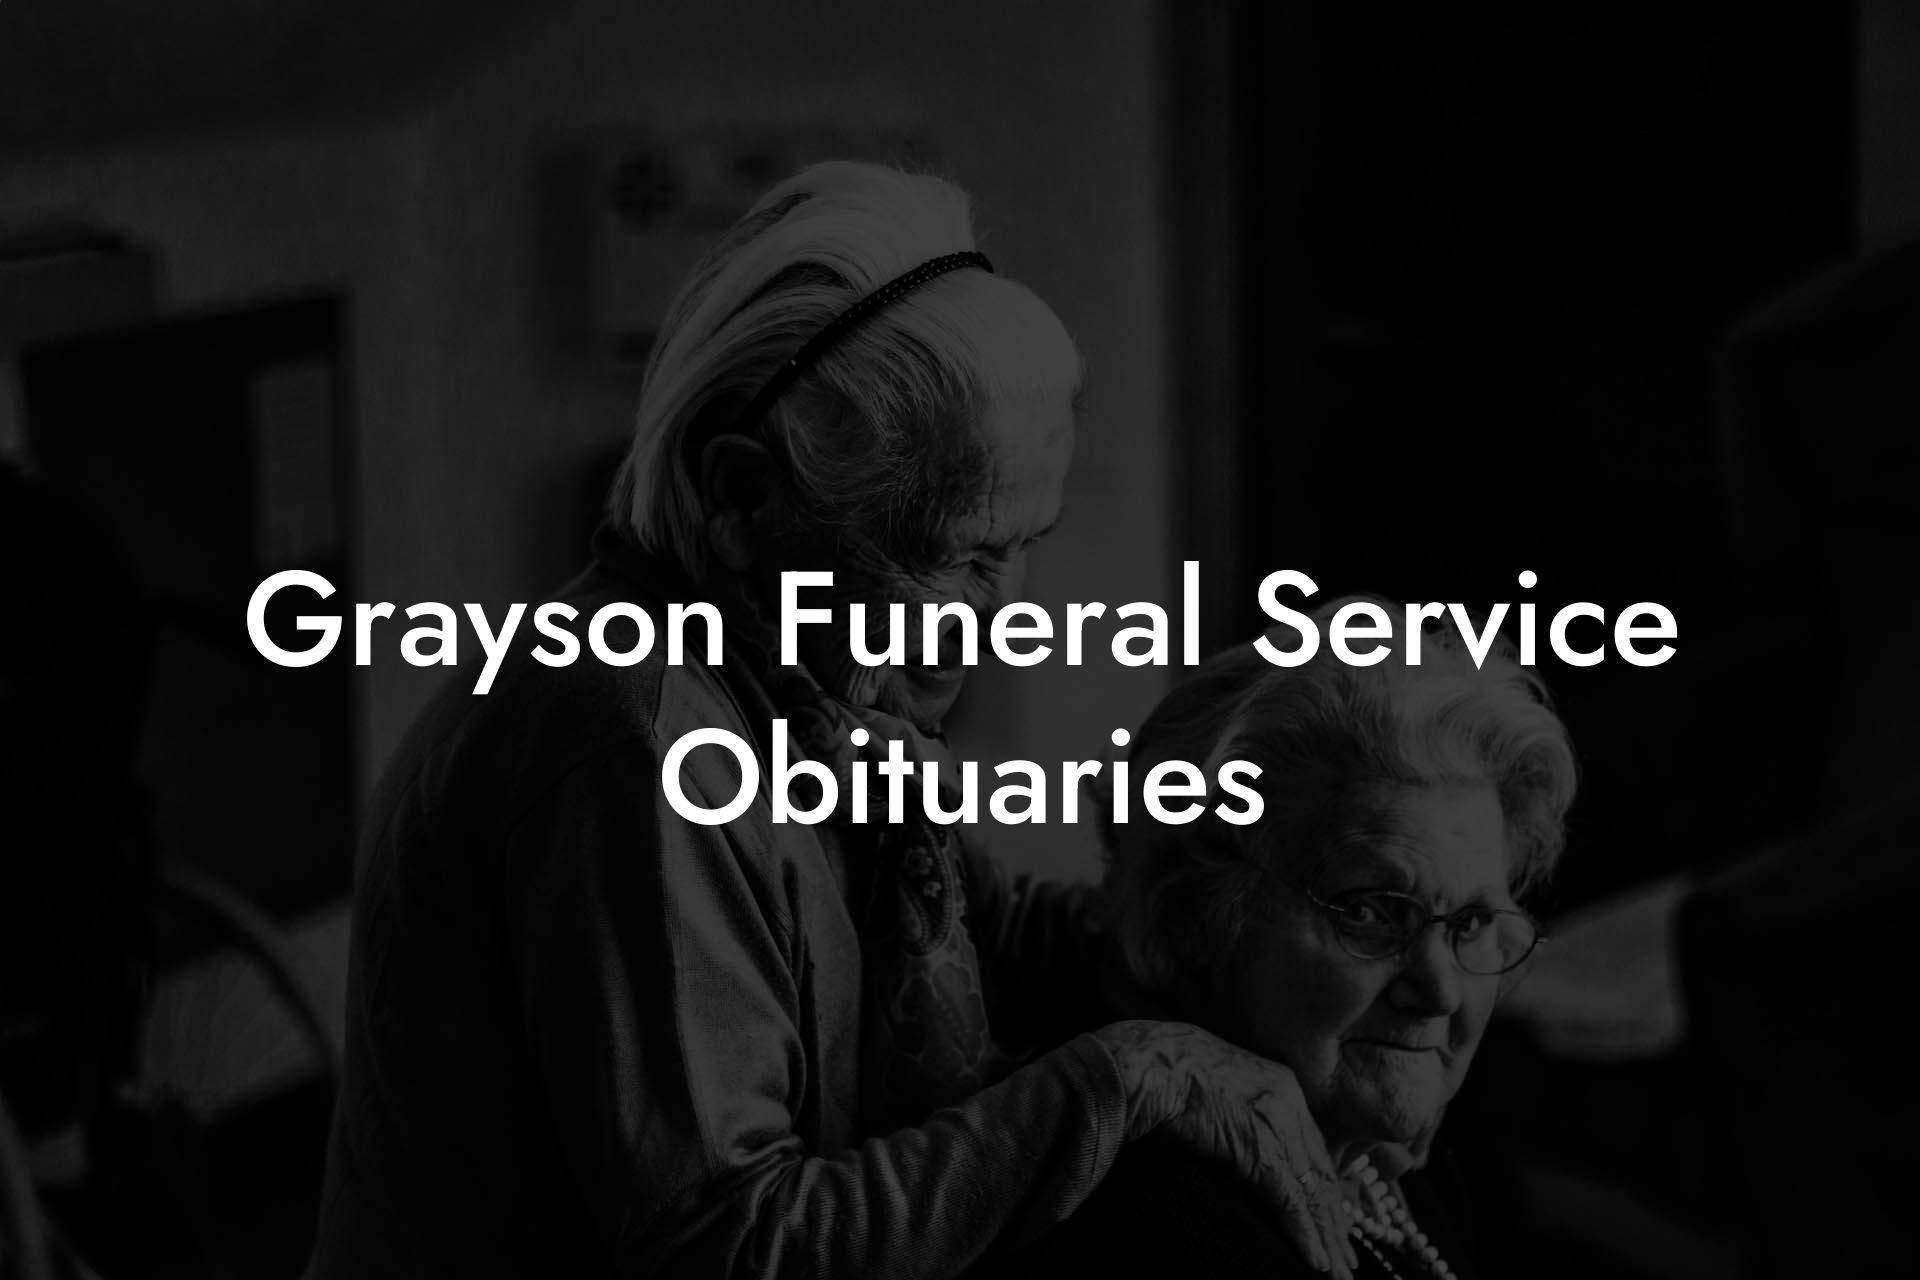 Grayson Funeral Service Obituaries